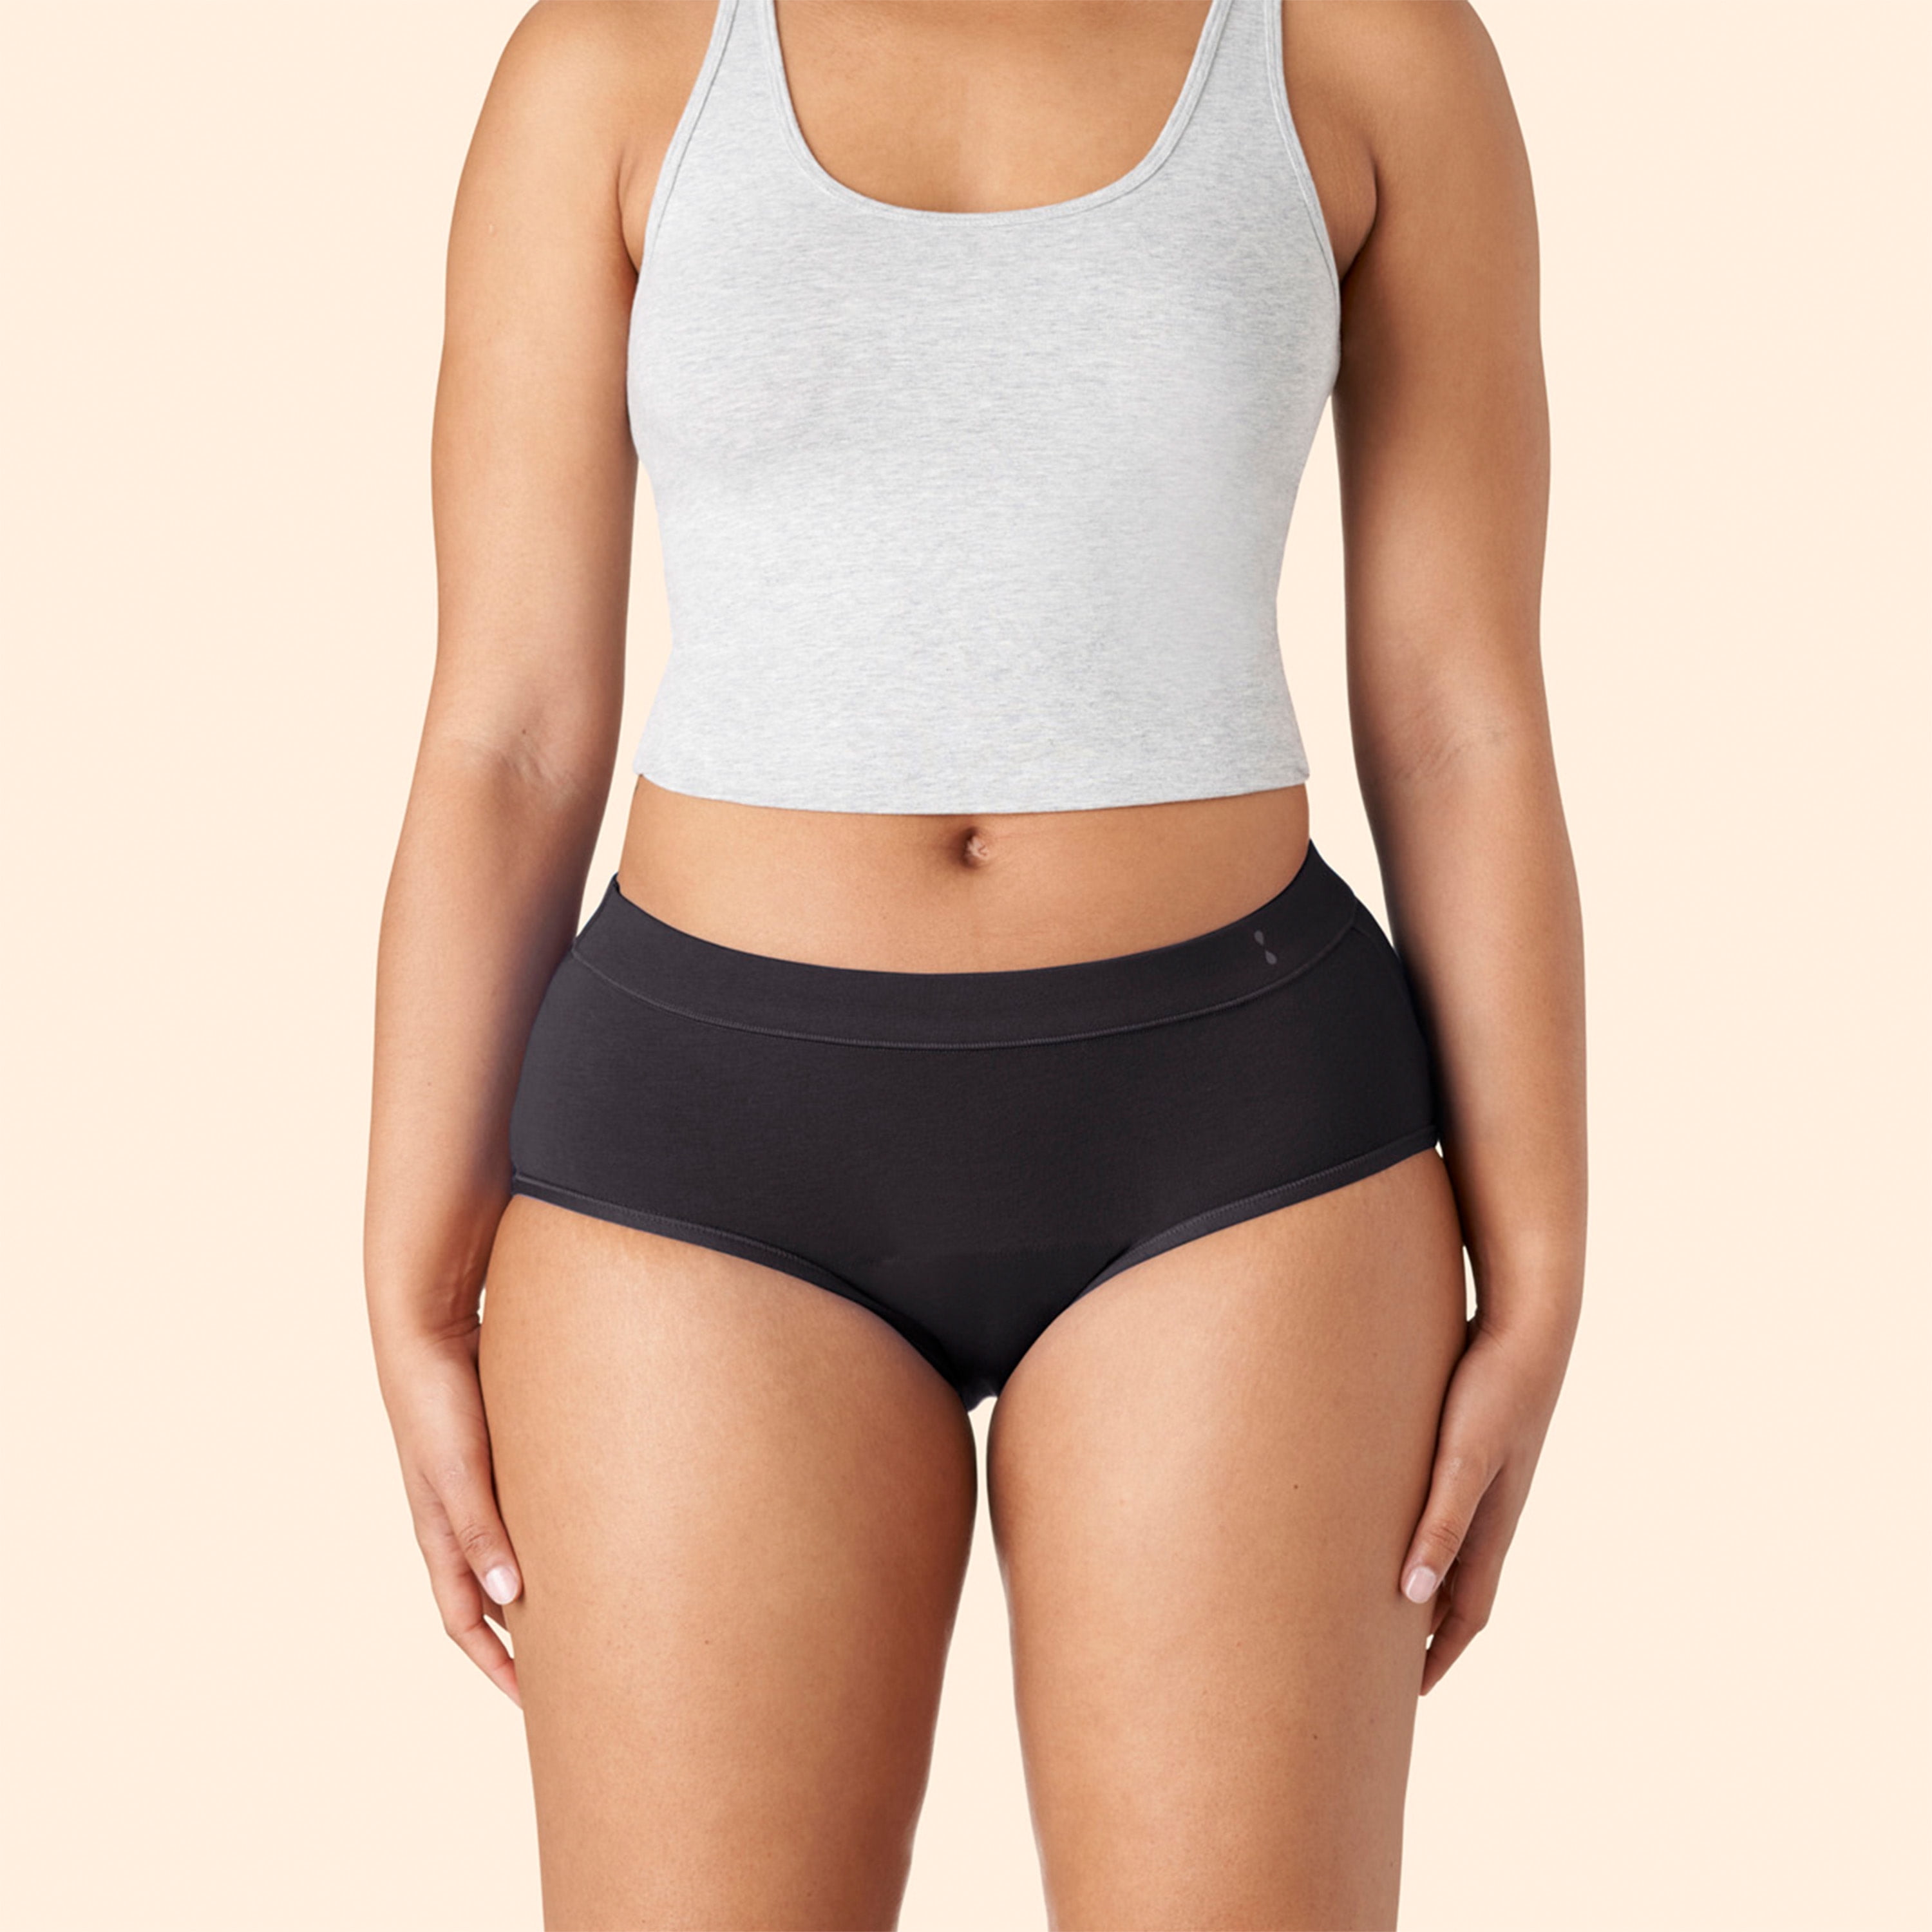 Thinx for All™ Women's Boyshort Period Underwear, Moderate Absorbency,  Black 